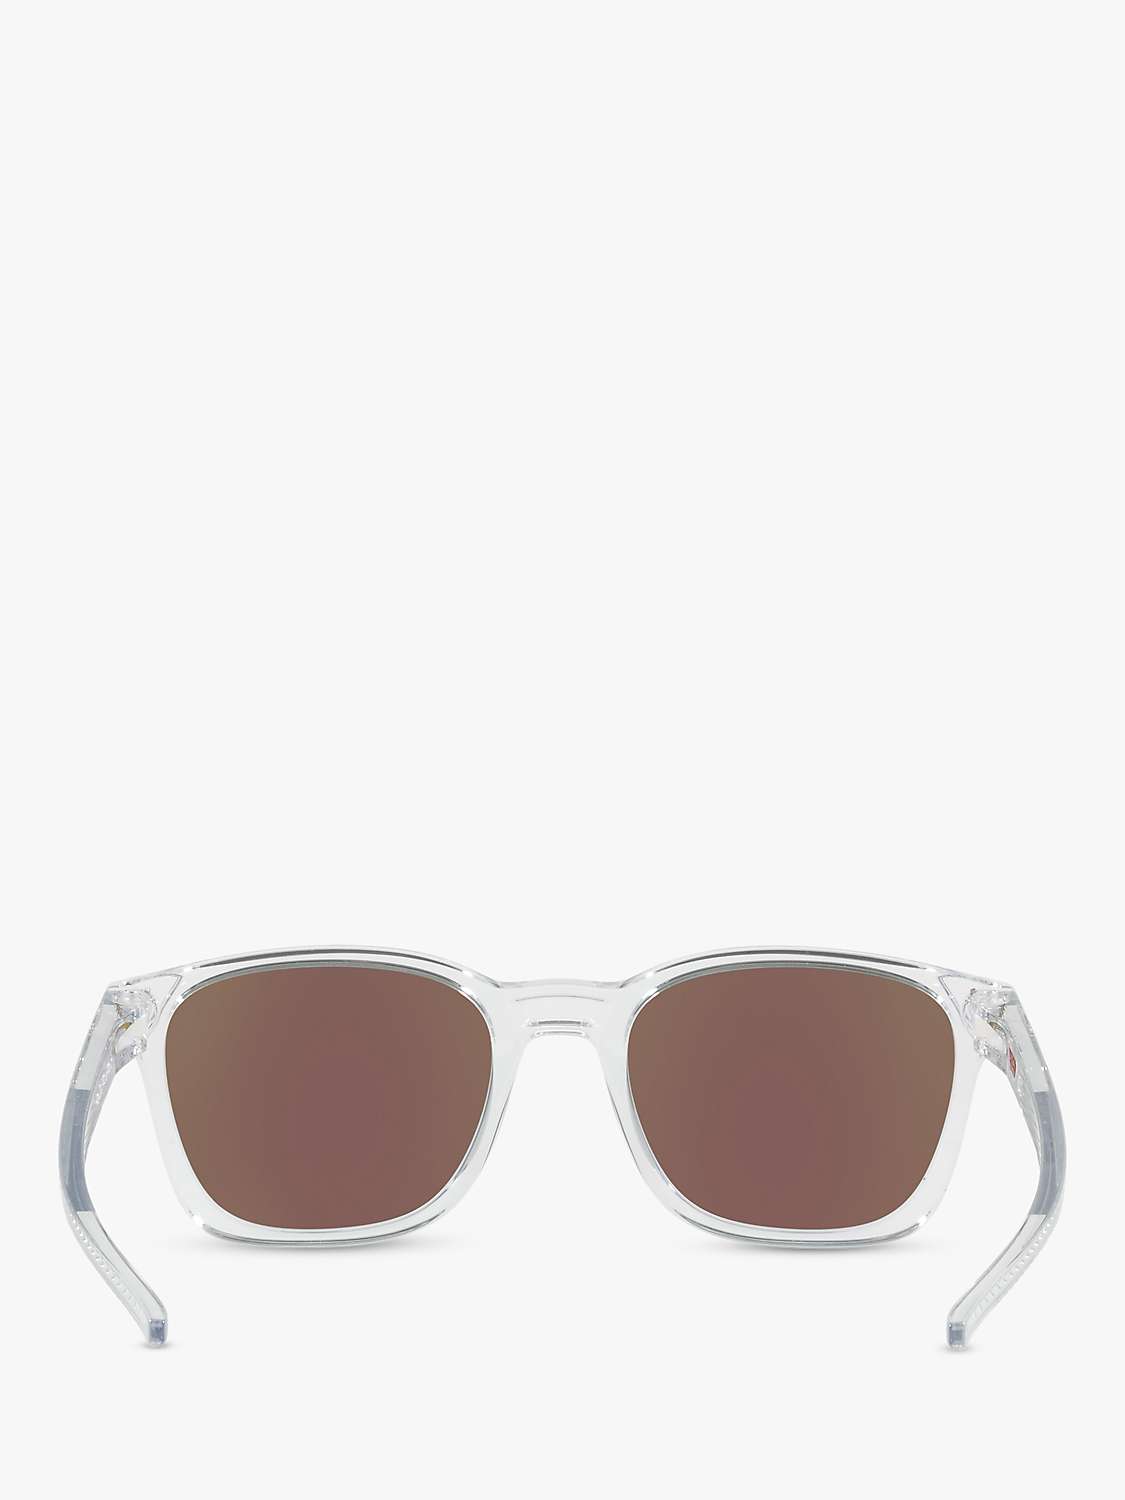 Buy Oakley OO9018 Men's Objector Sunglasses, Clear/Blue Online at johnlewis.com